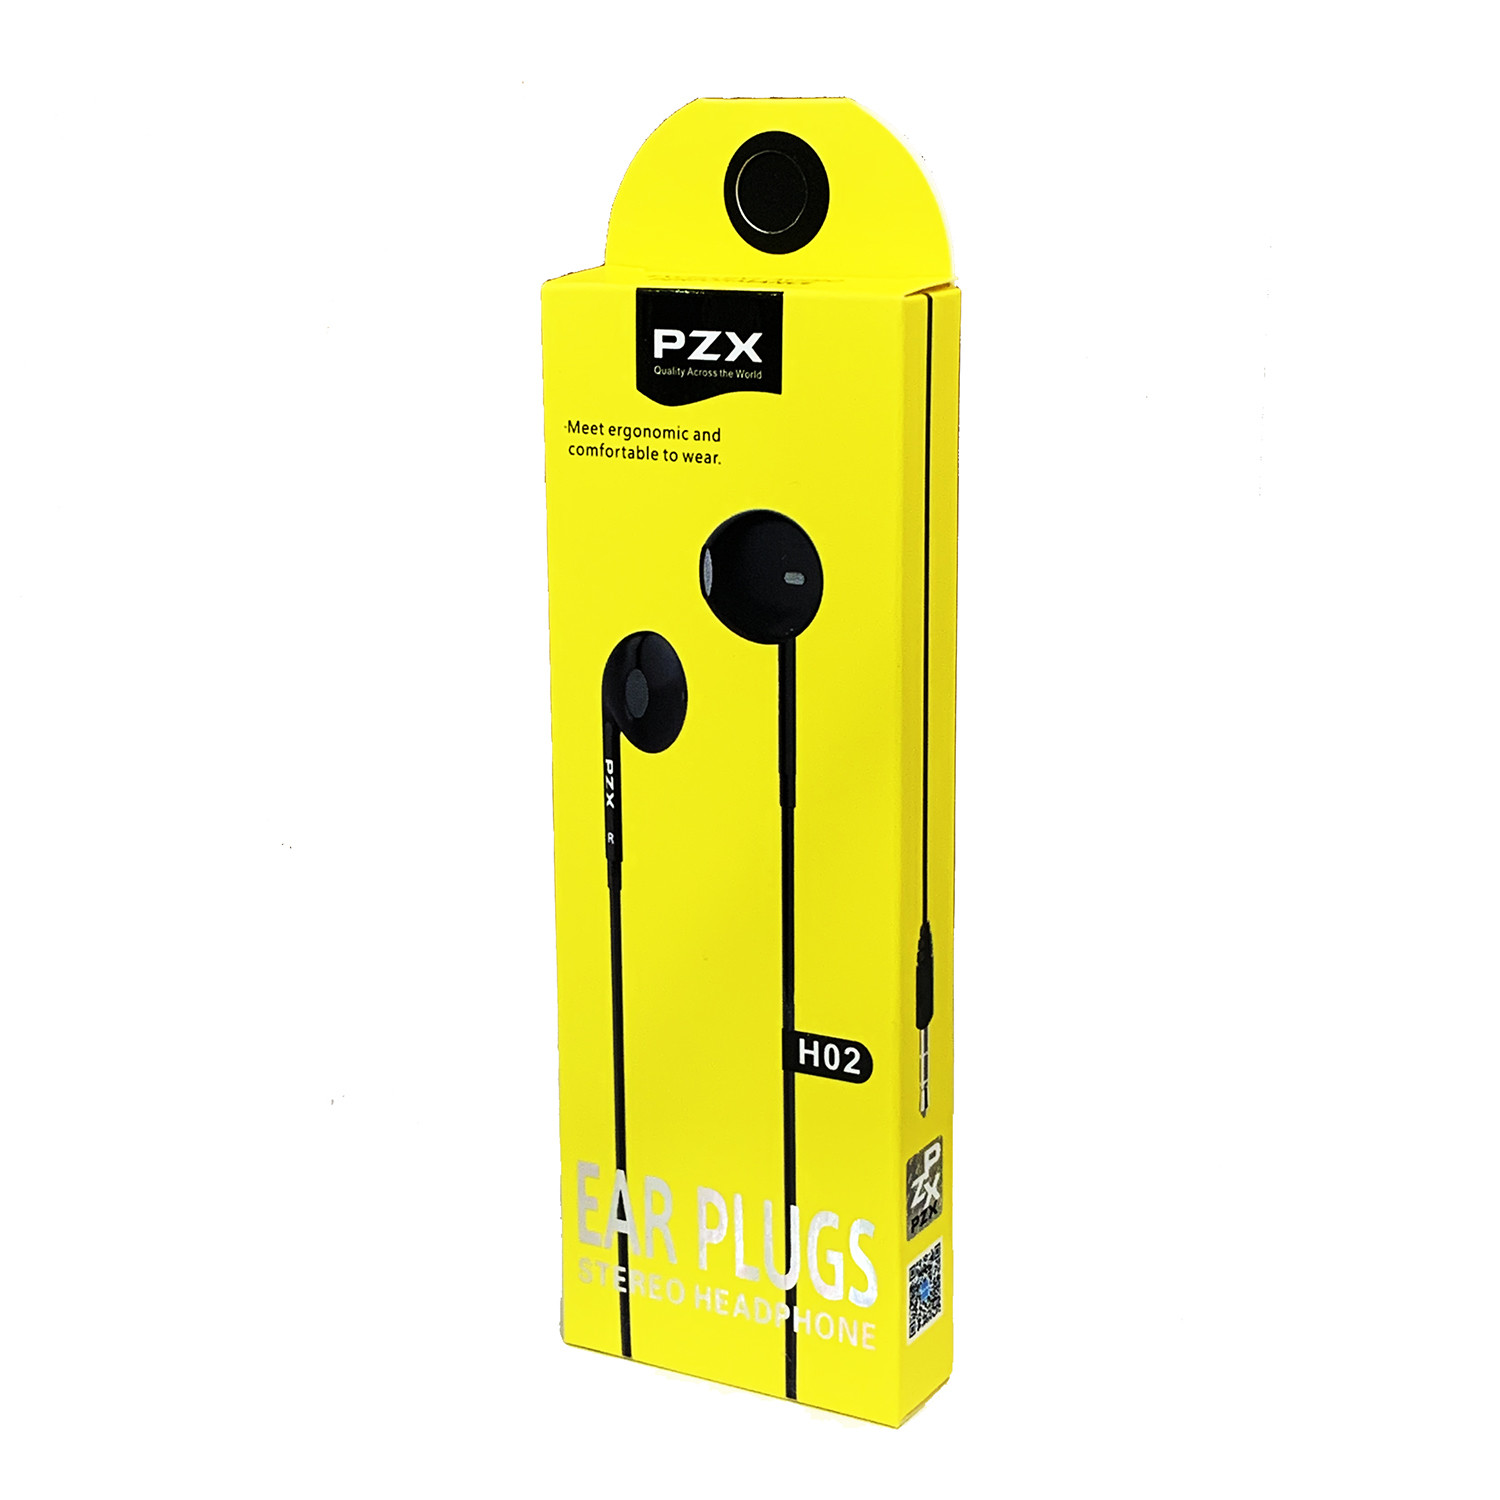 Pzx 3 5 Mm Ear Plugs Stereo Headphone H02